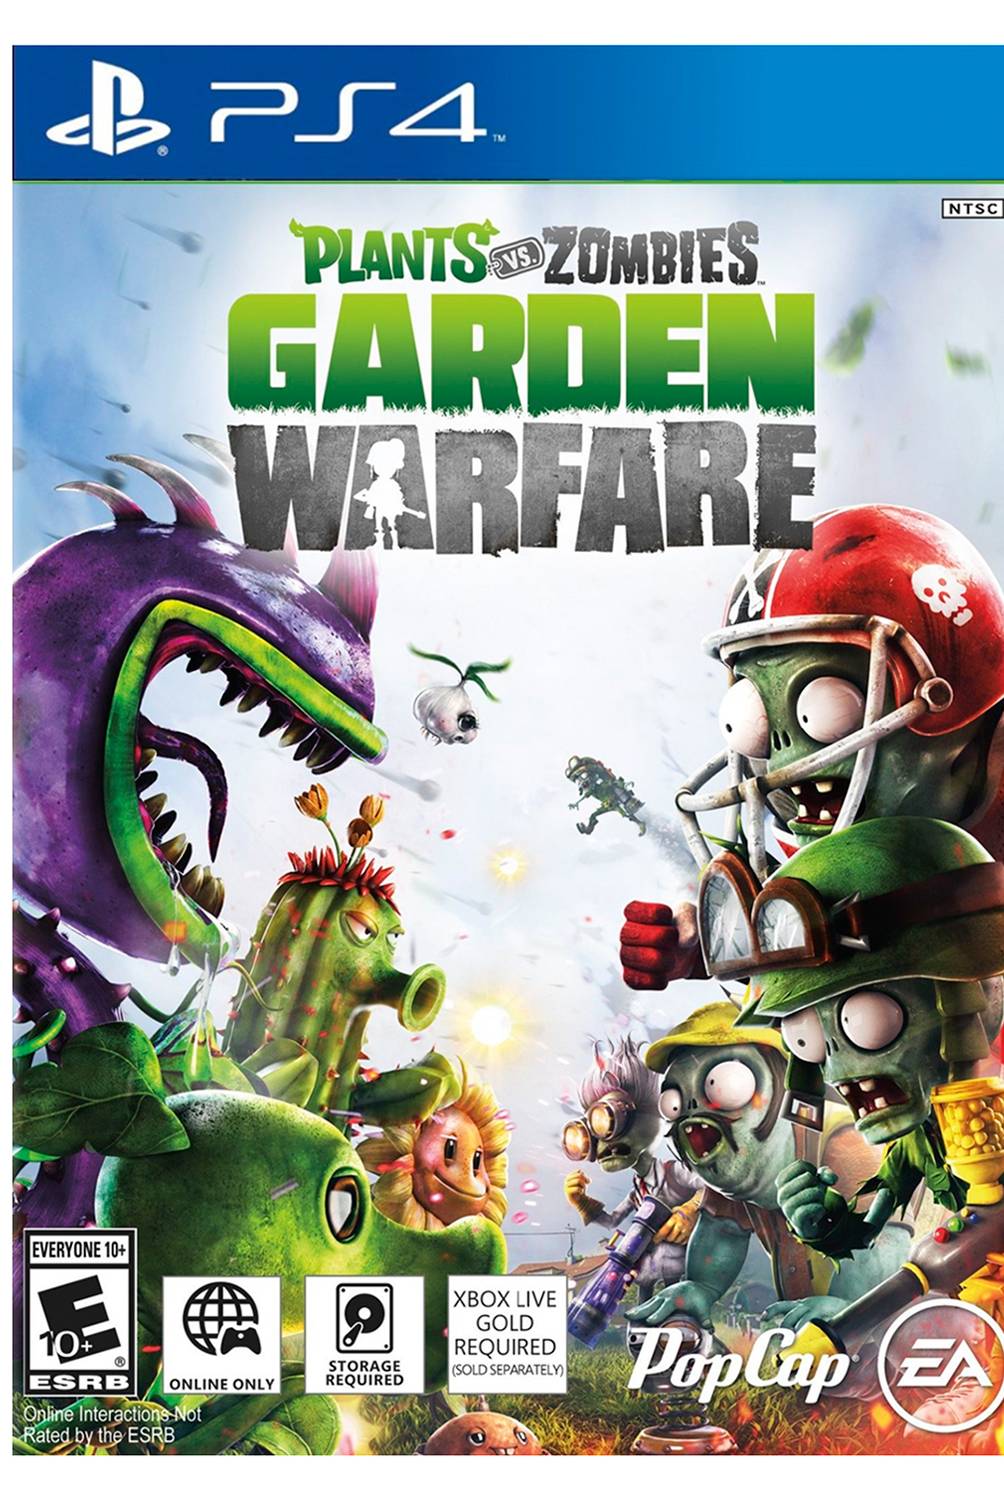 Electronic Arts - Plants vs Zombies Garden Warfare PS4